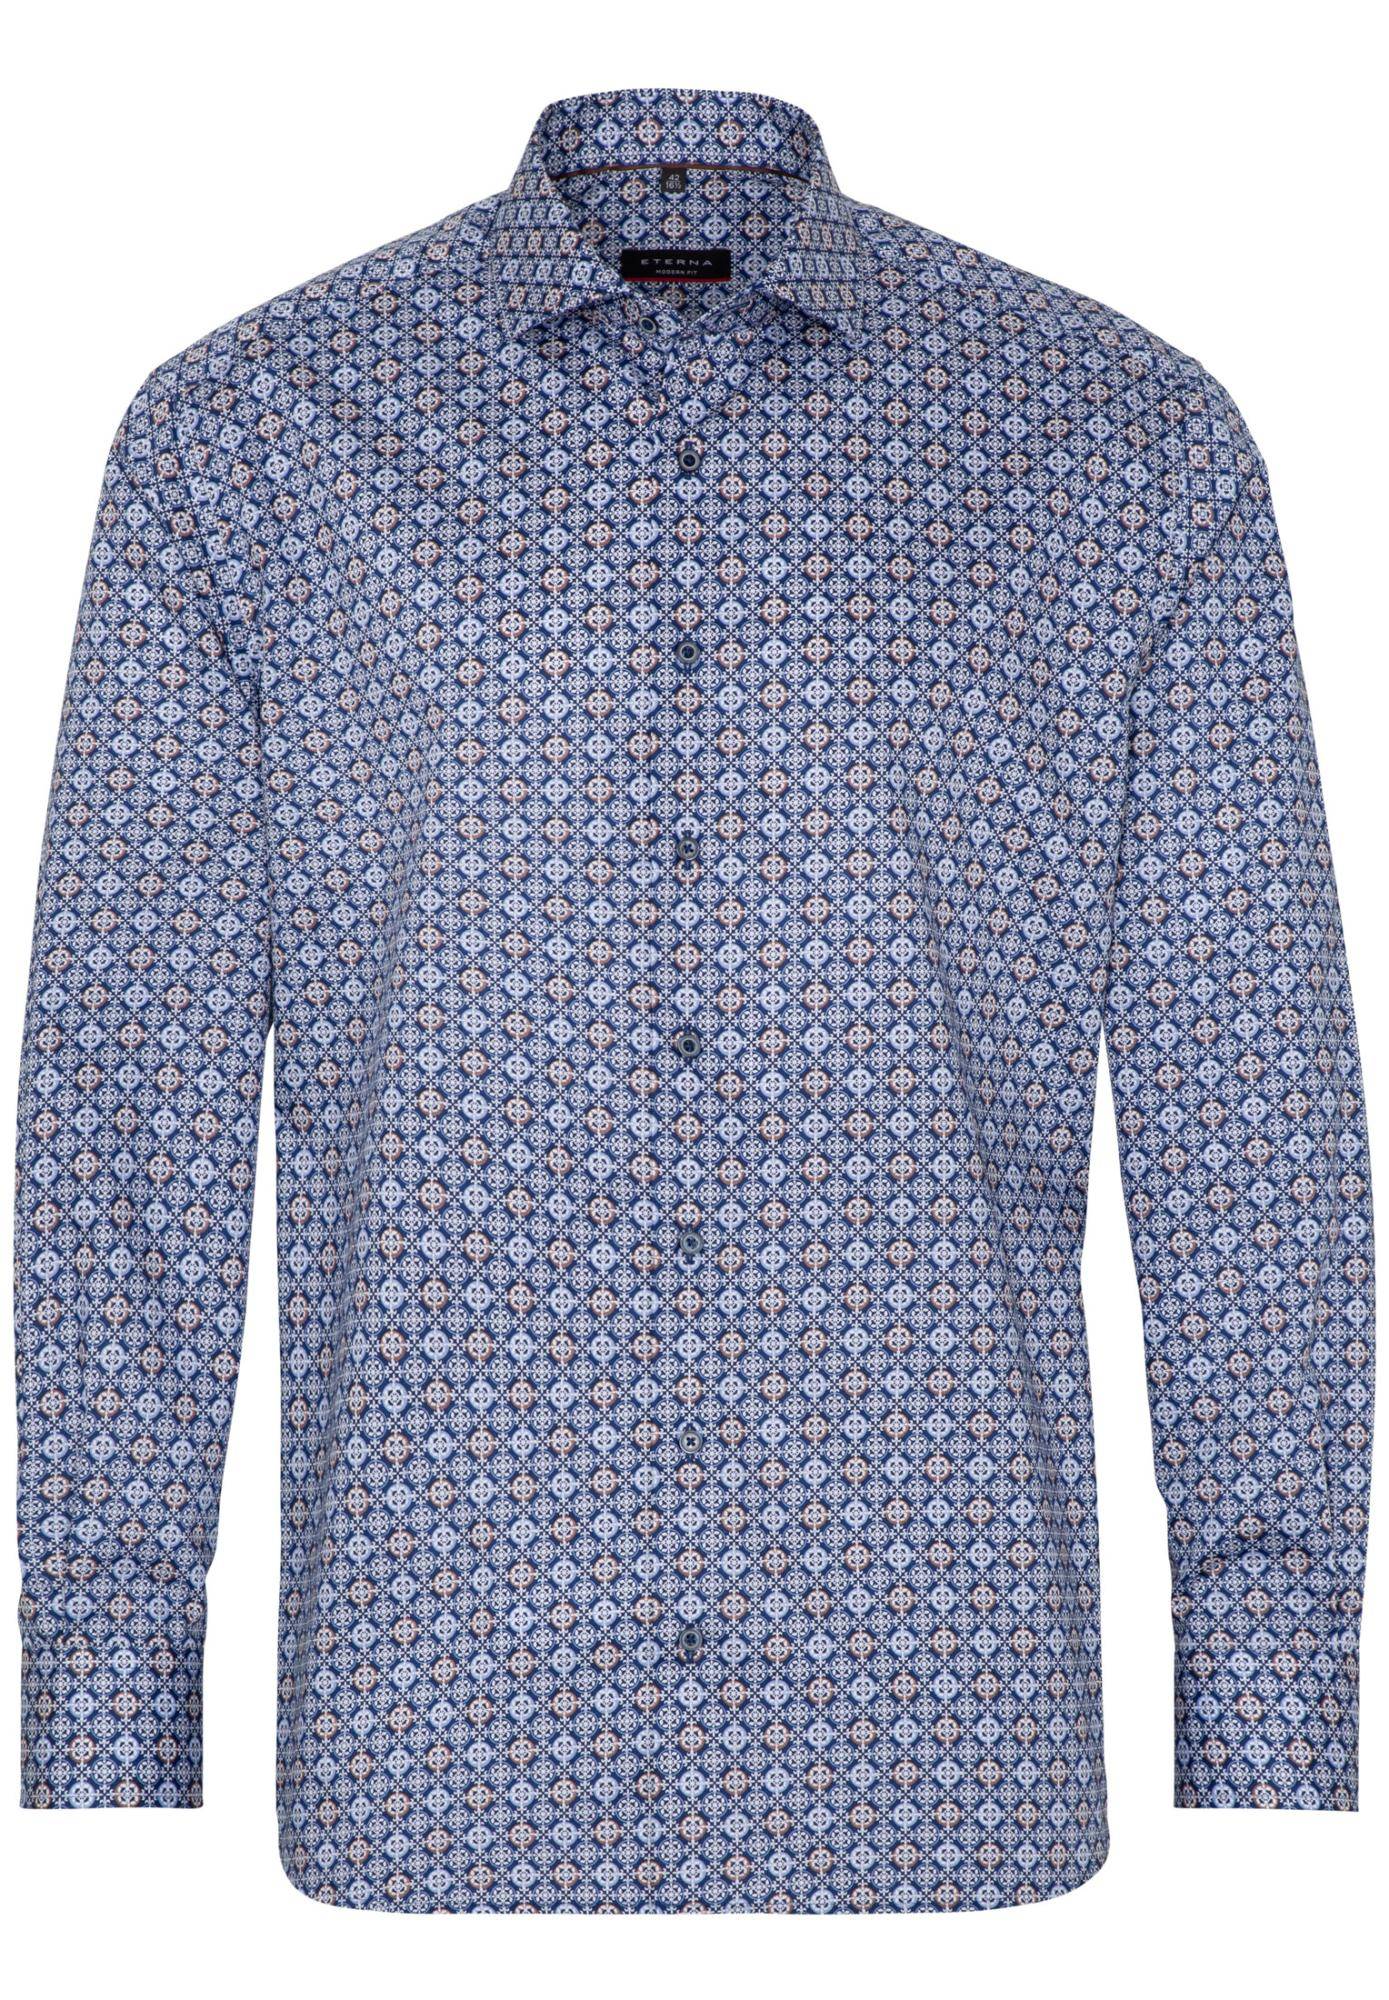 Мужская рубашка ETERNA, синяя, цвет синий, размер 58 - фото 1